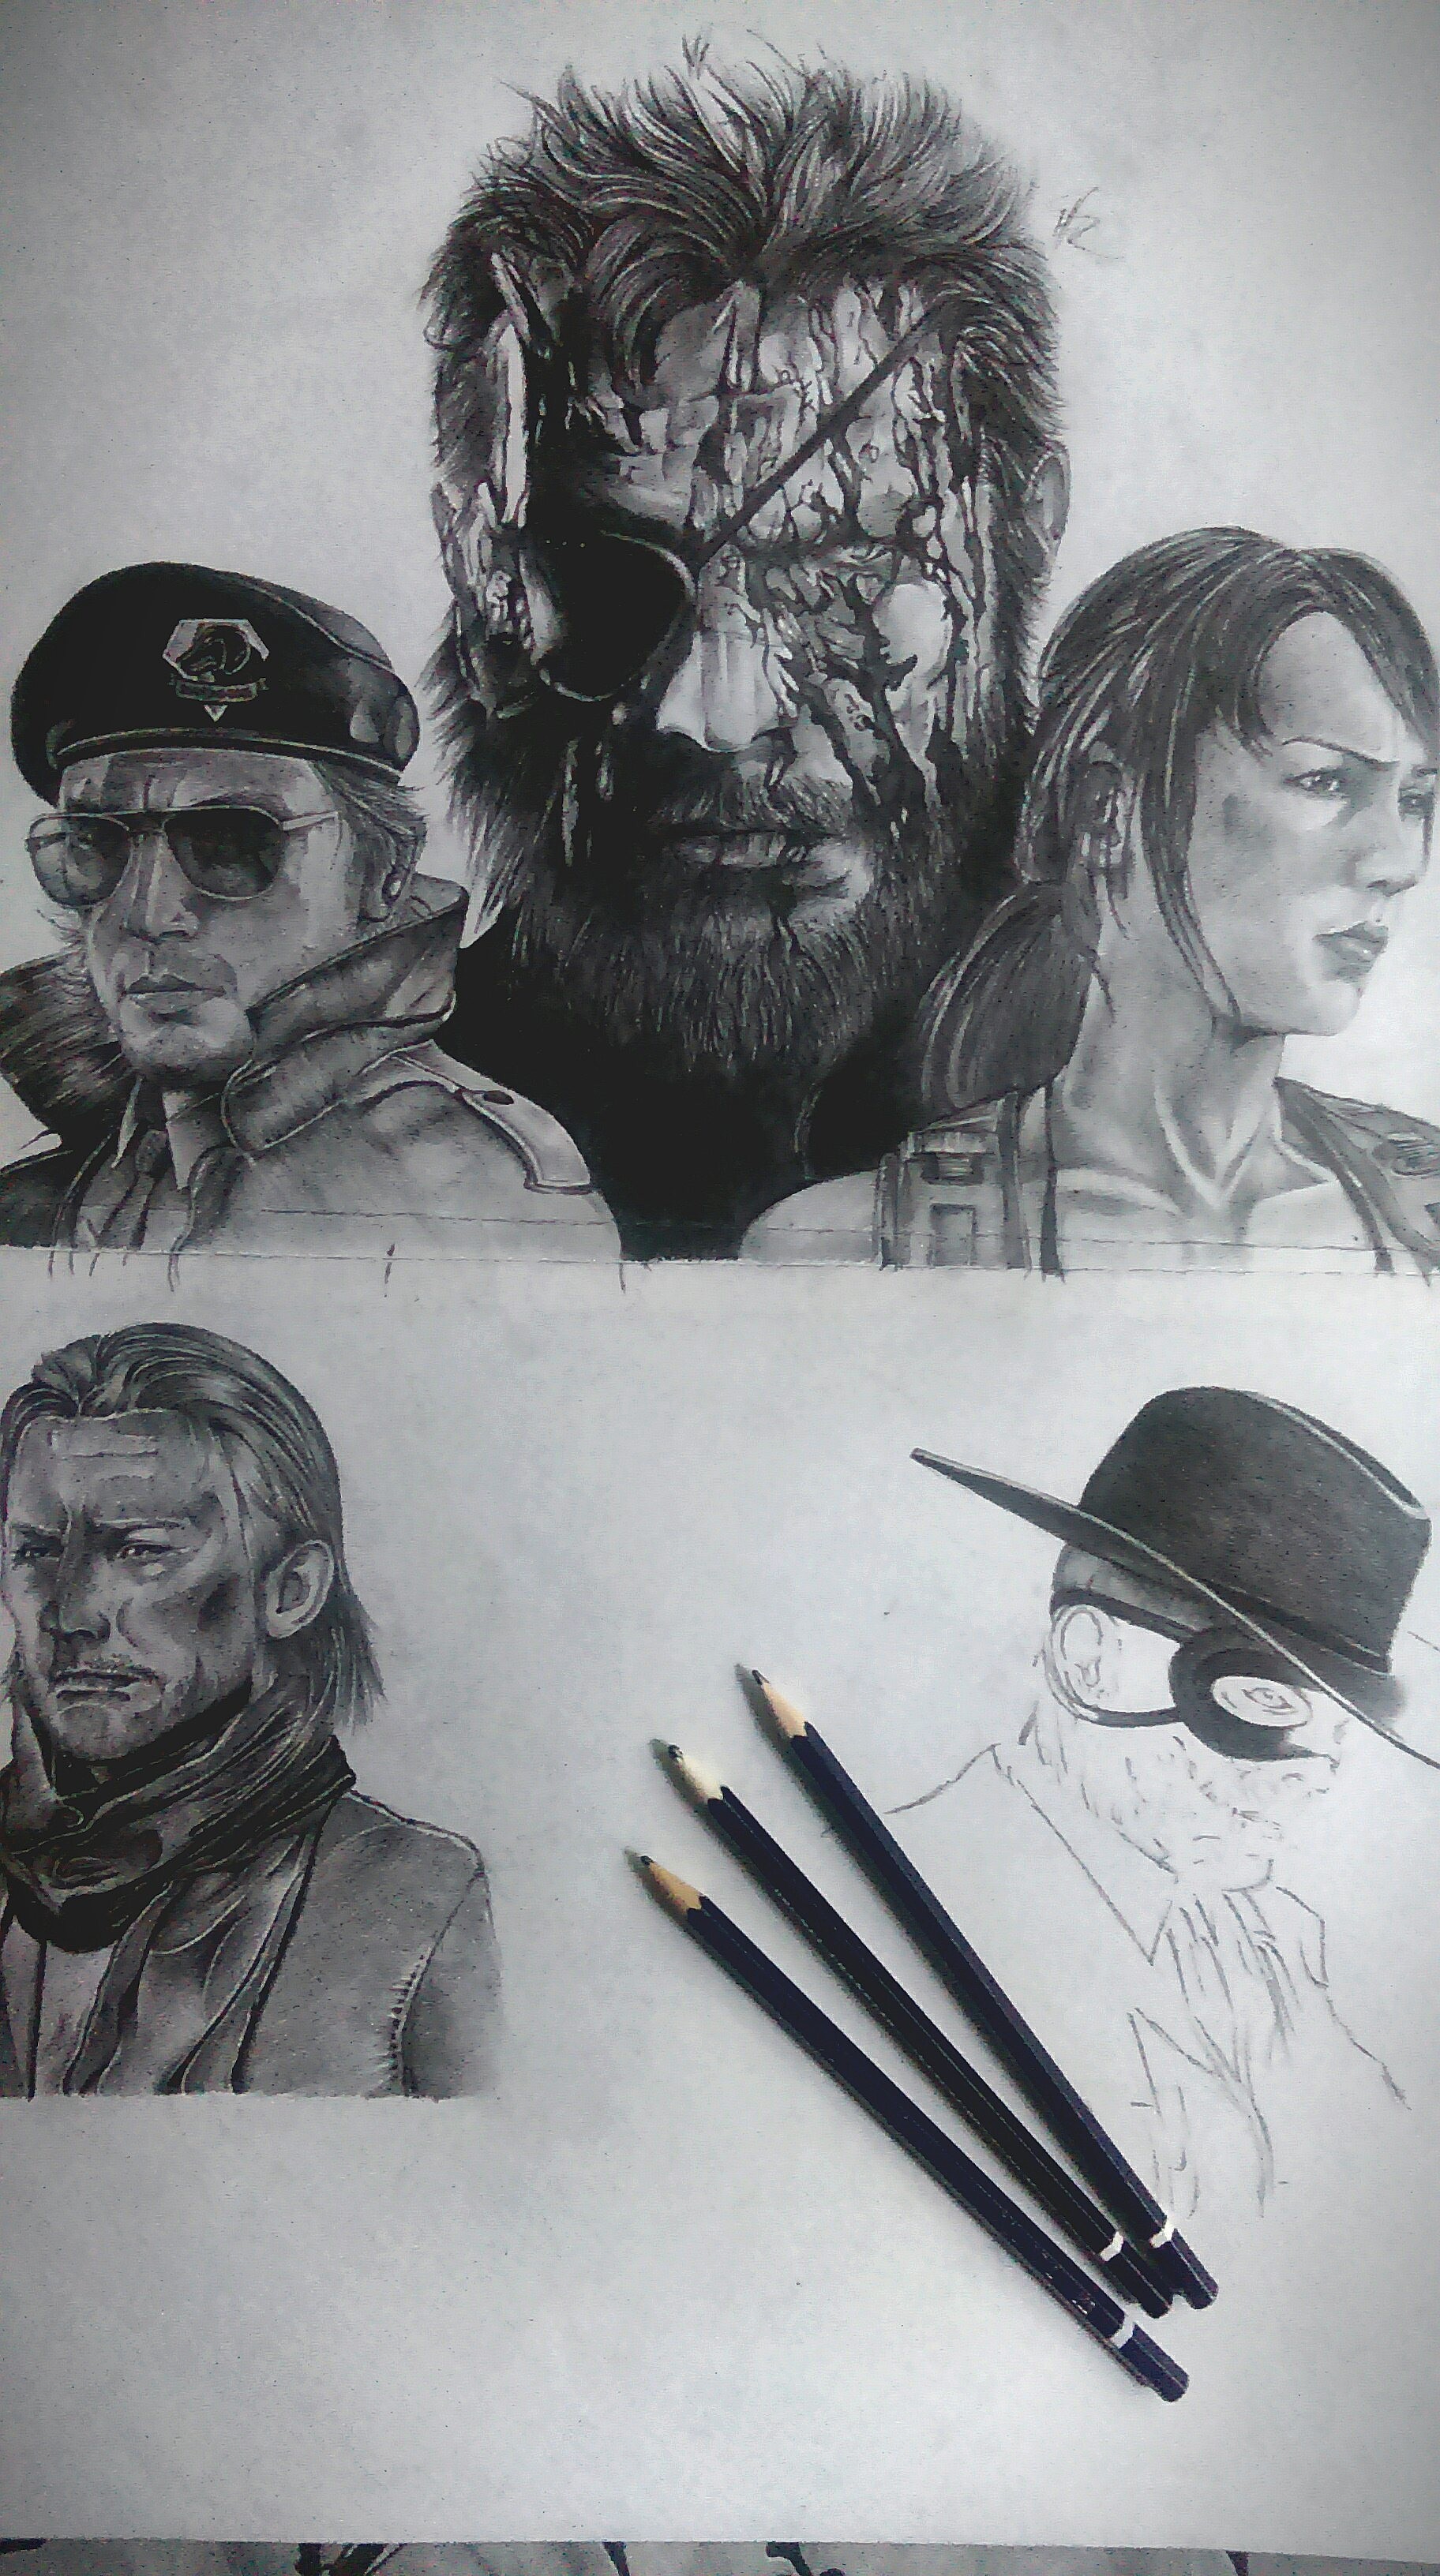 Michael Horler Metal Gear Solid V The Phantom Pain Wip Pencilwork Michael C Horler